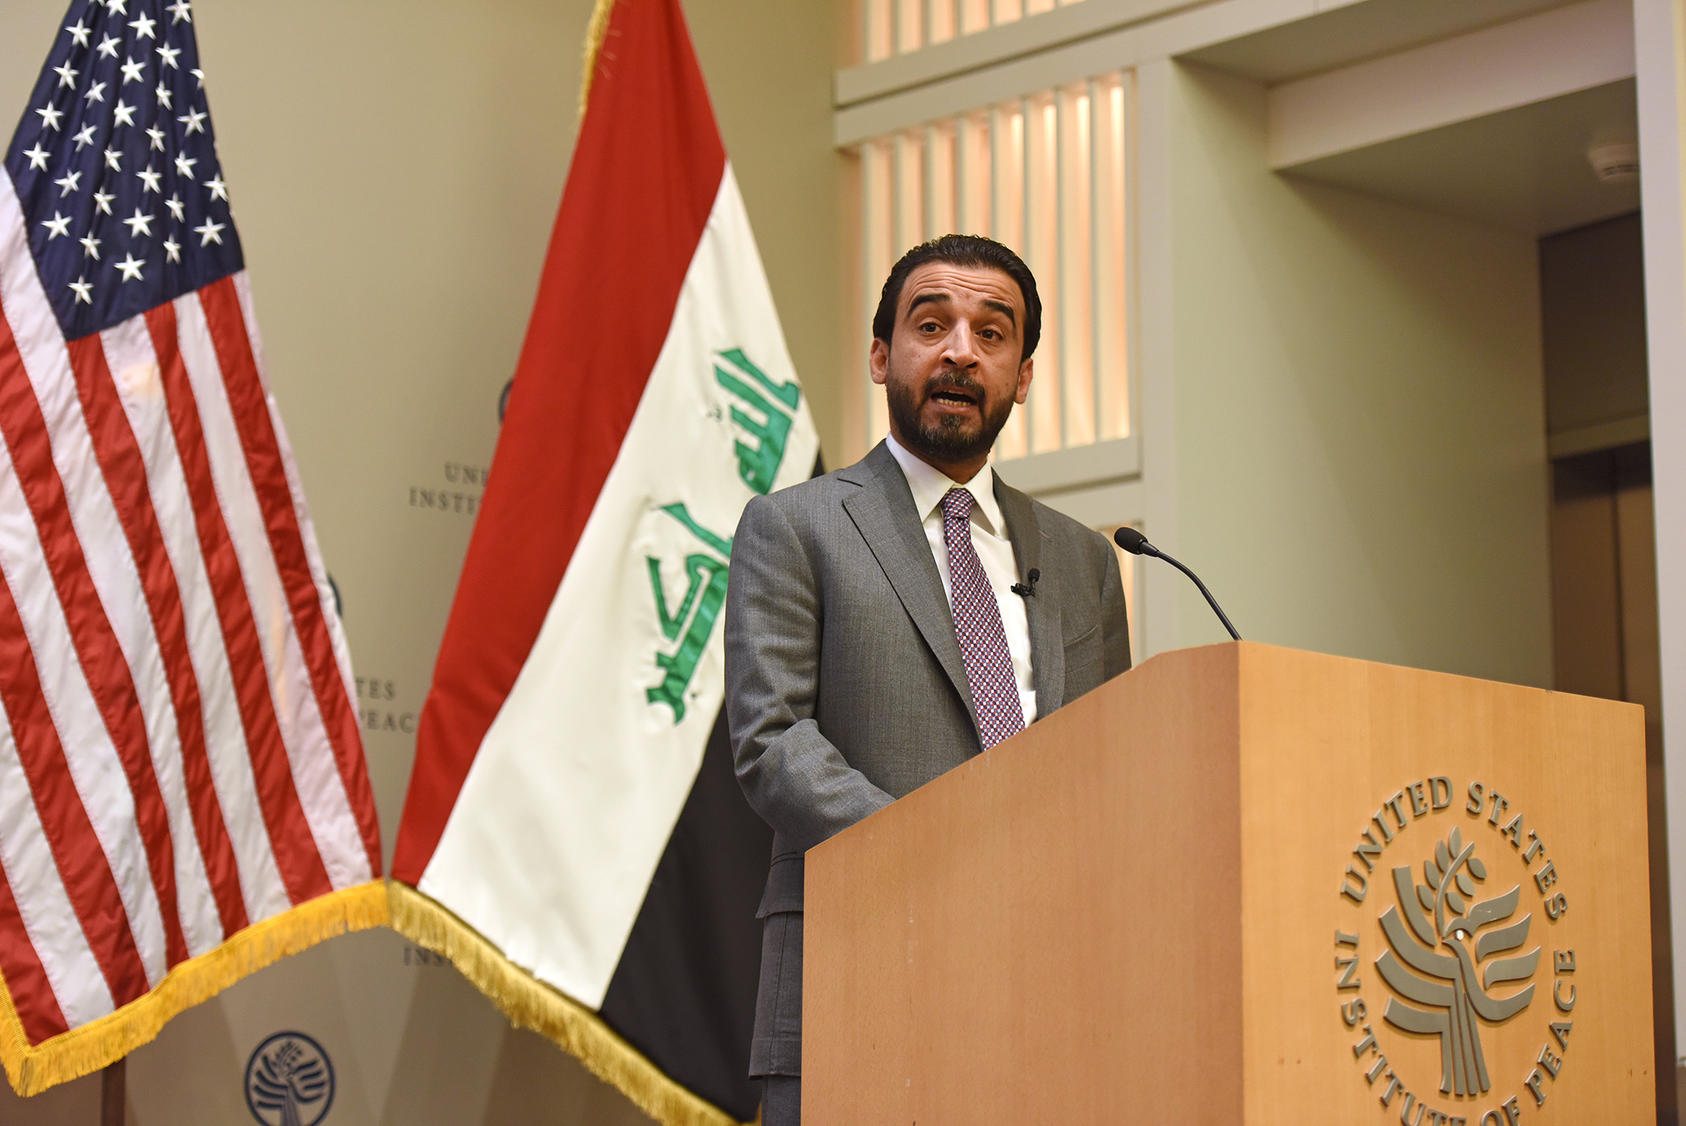 Iraqi Parliament Speaker Mohamed al-Halbousi speaks at a public event at USIP, March 29, 2019.